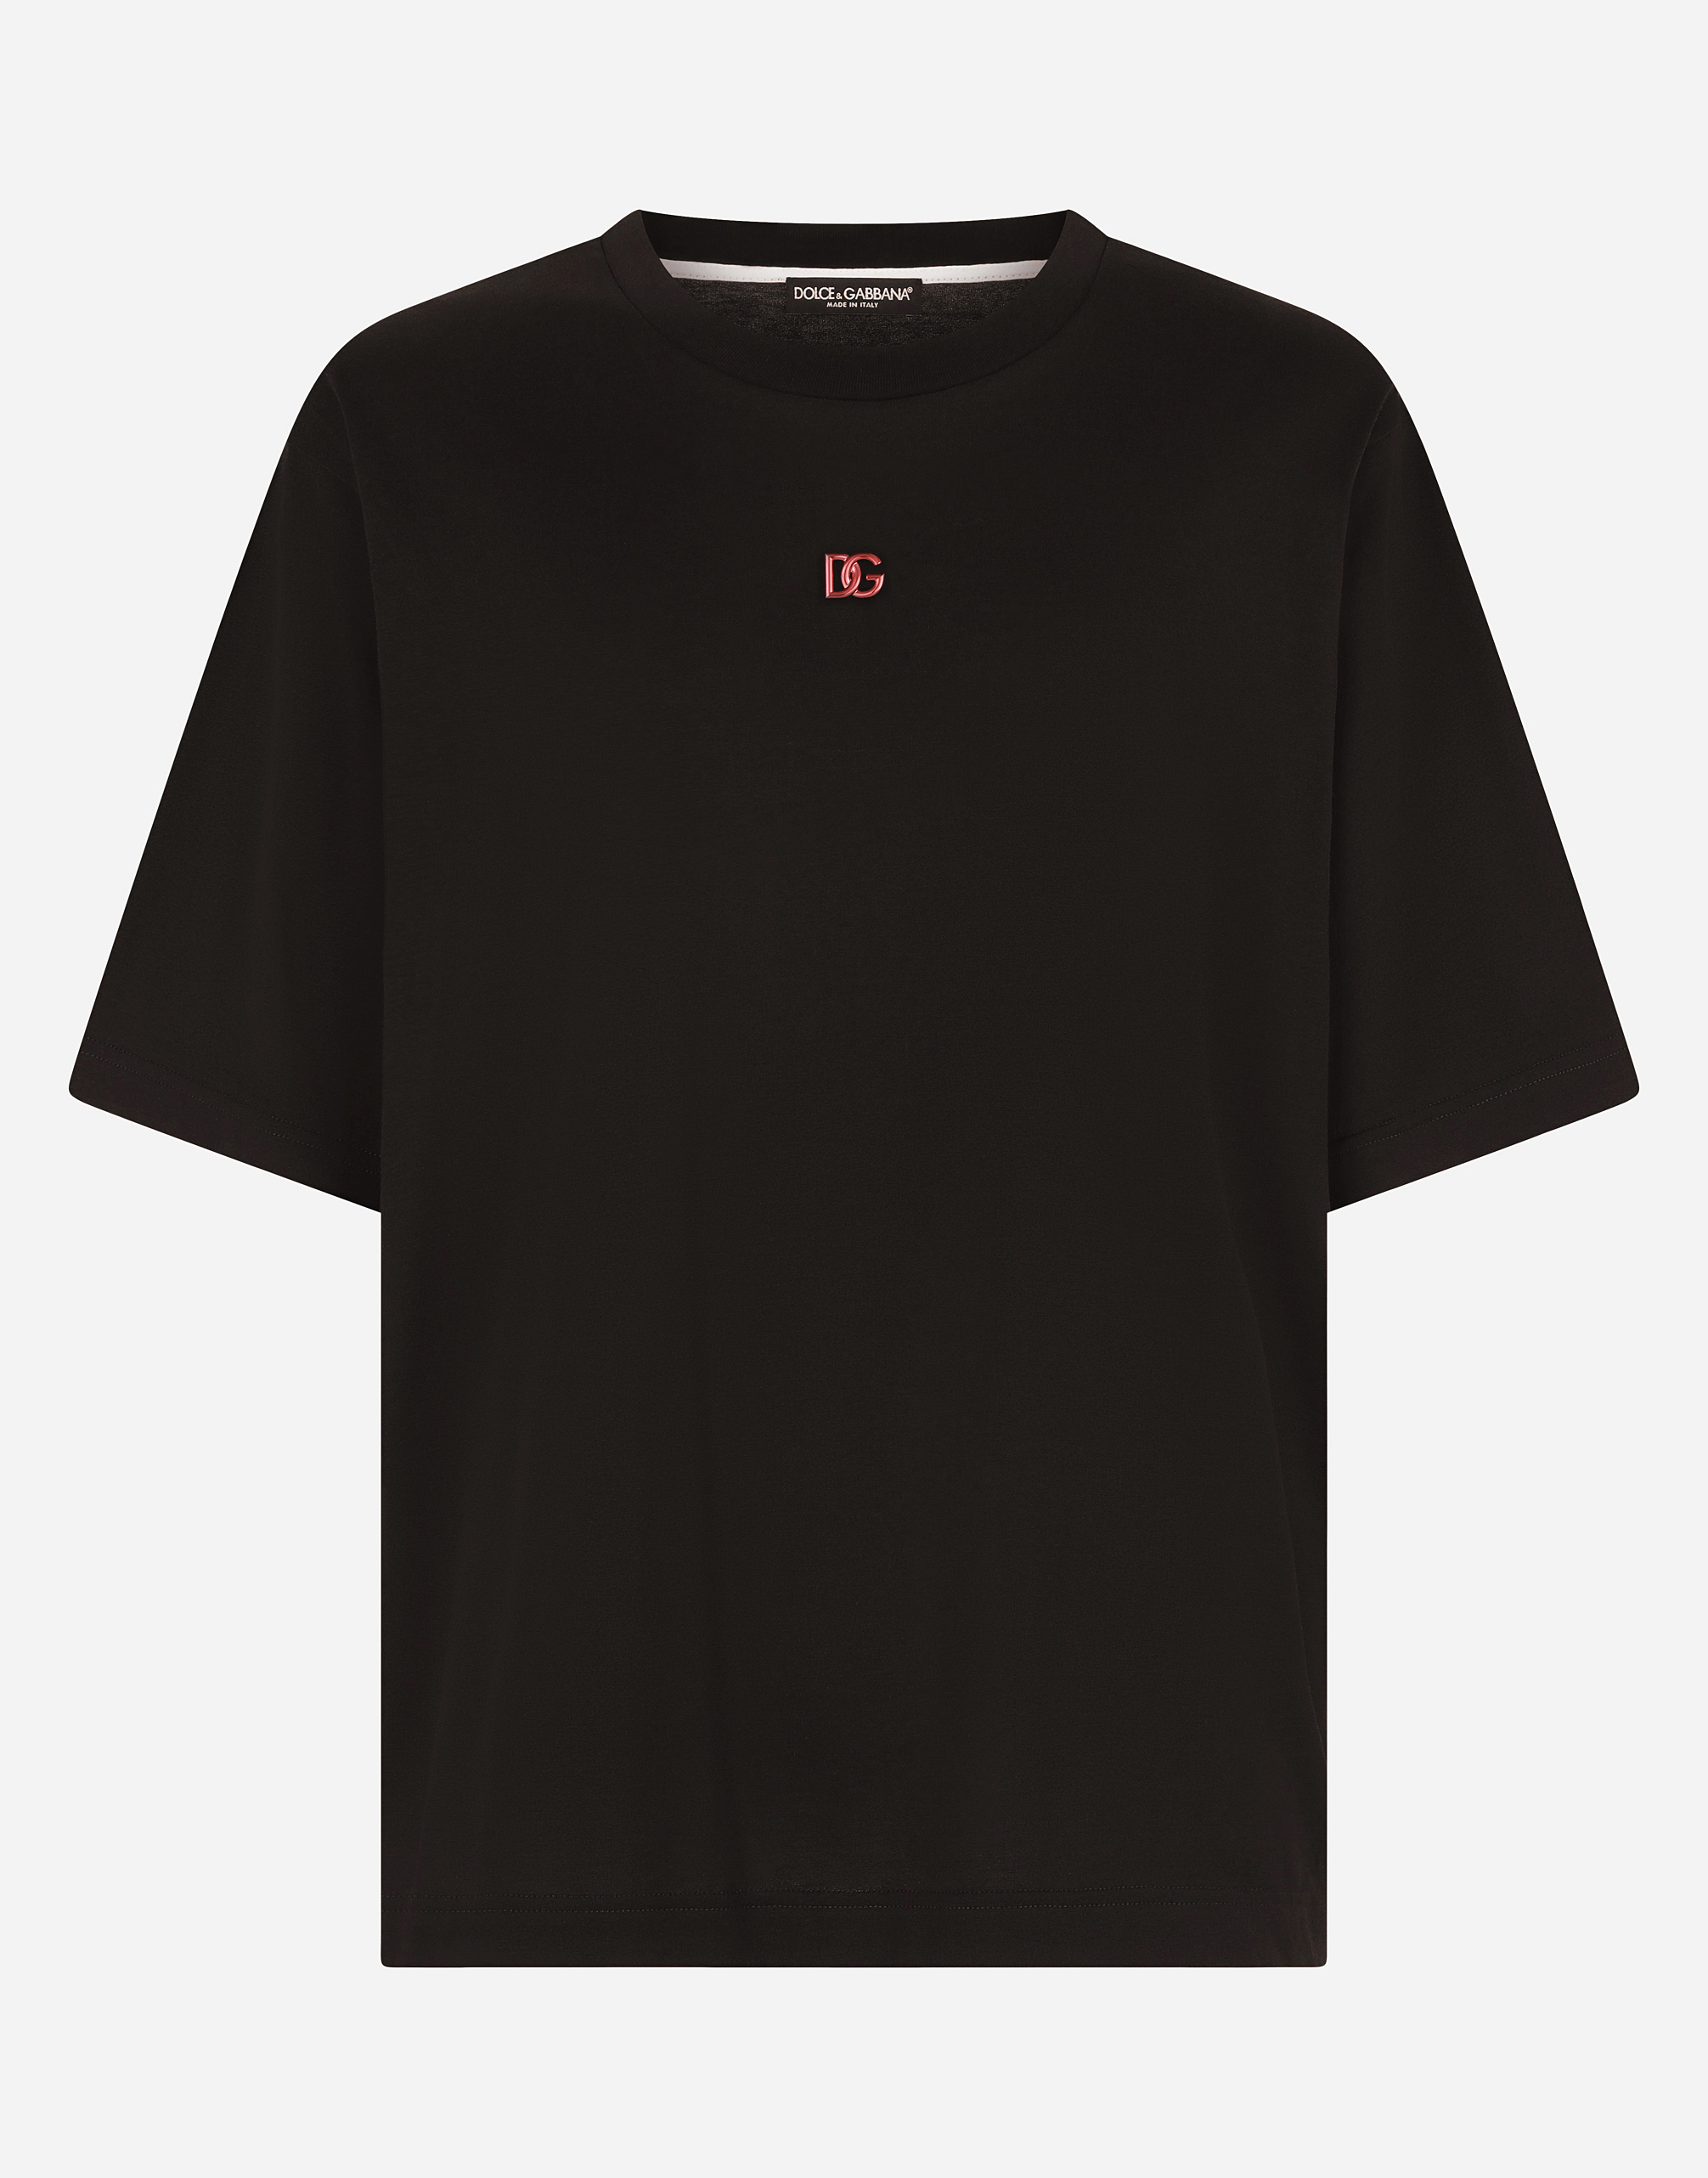 Cotton T-shirt with metallic DG logo in Black